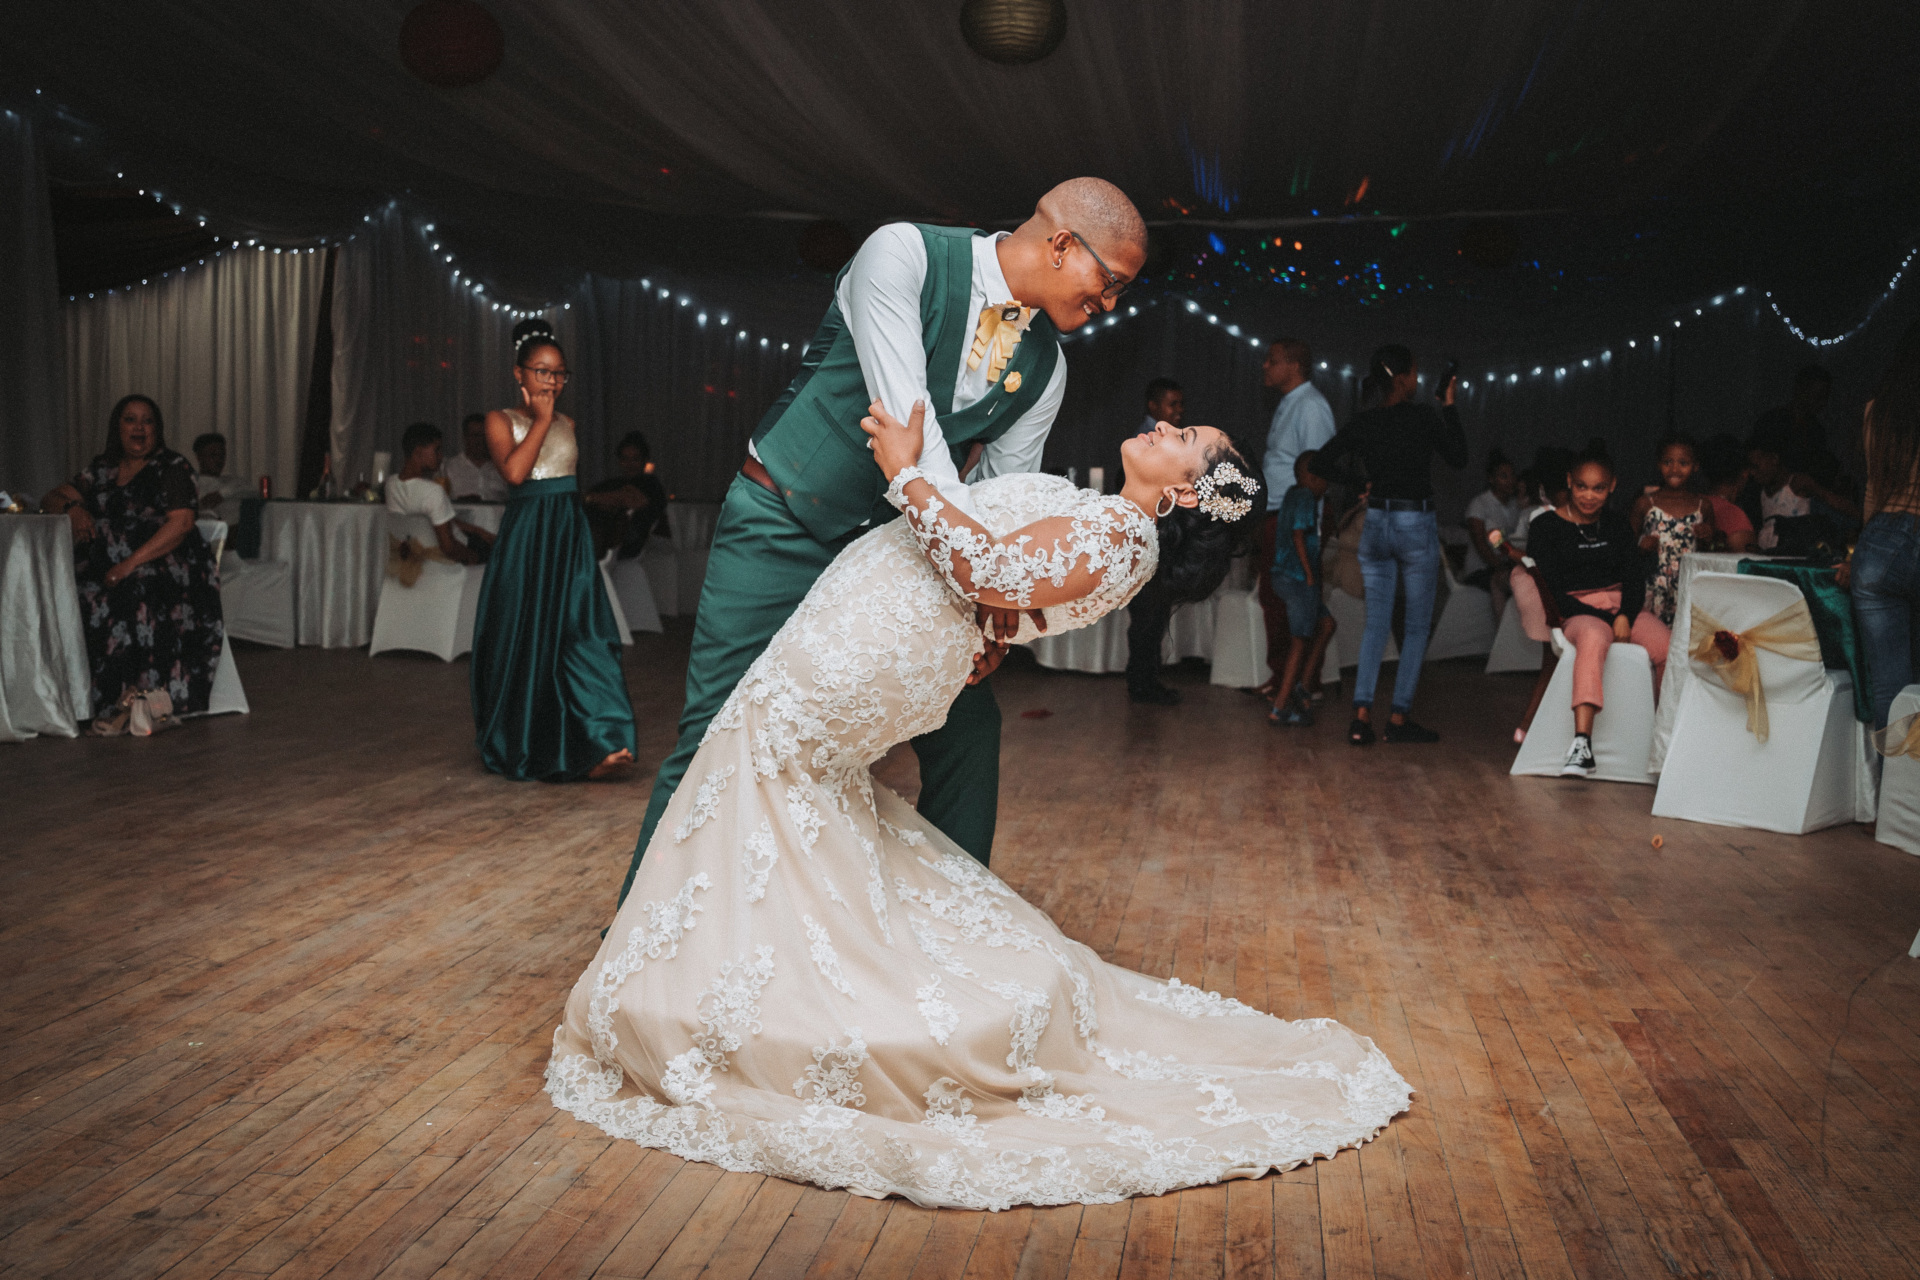 Bride and groom dancing at wedding